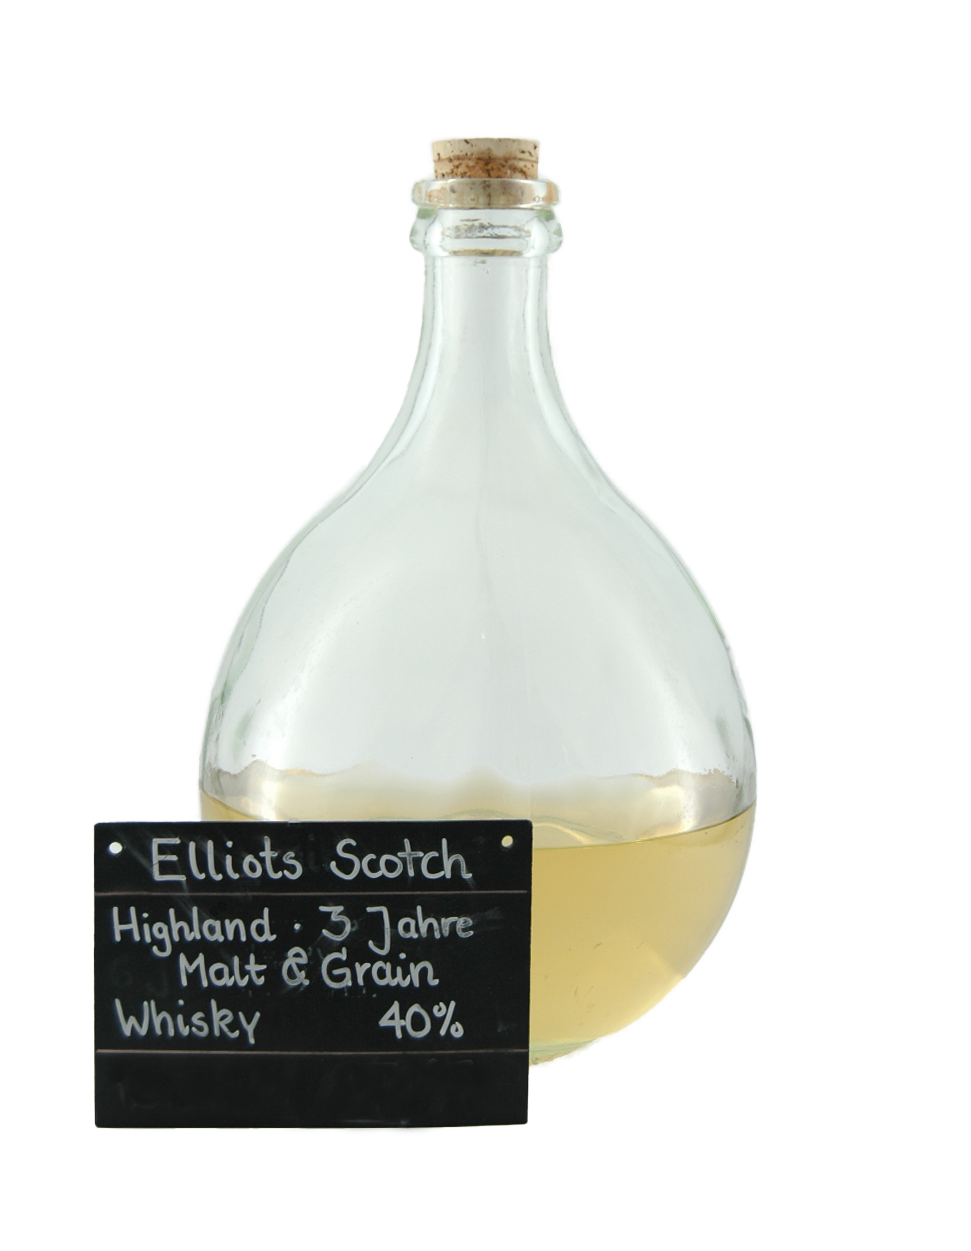 Elliots Scotch Whisky Malt & Grain 3 Jahre - 200ml